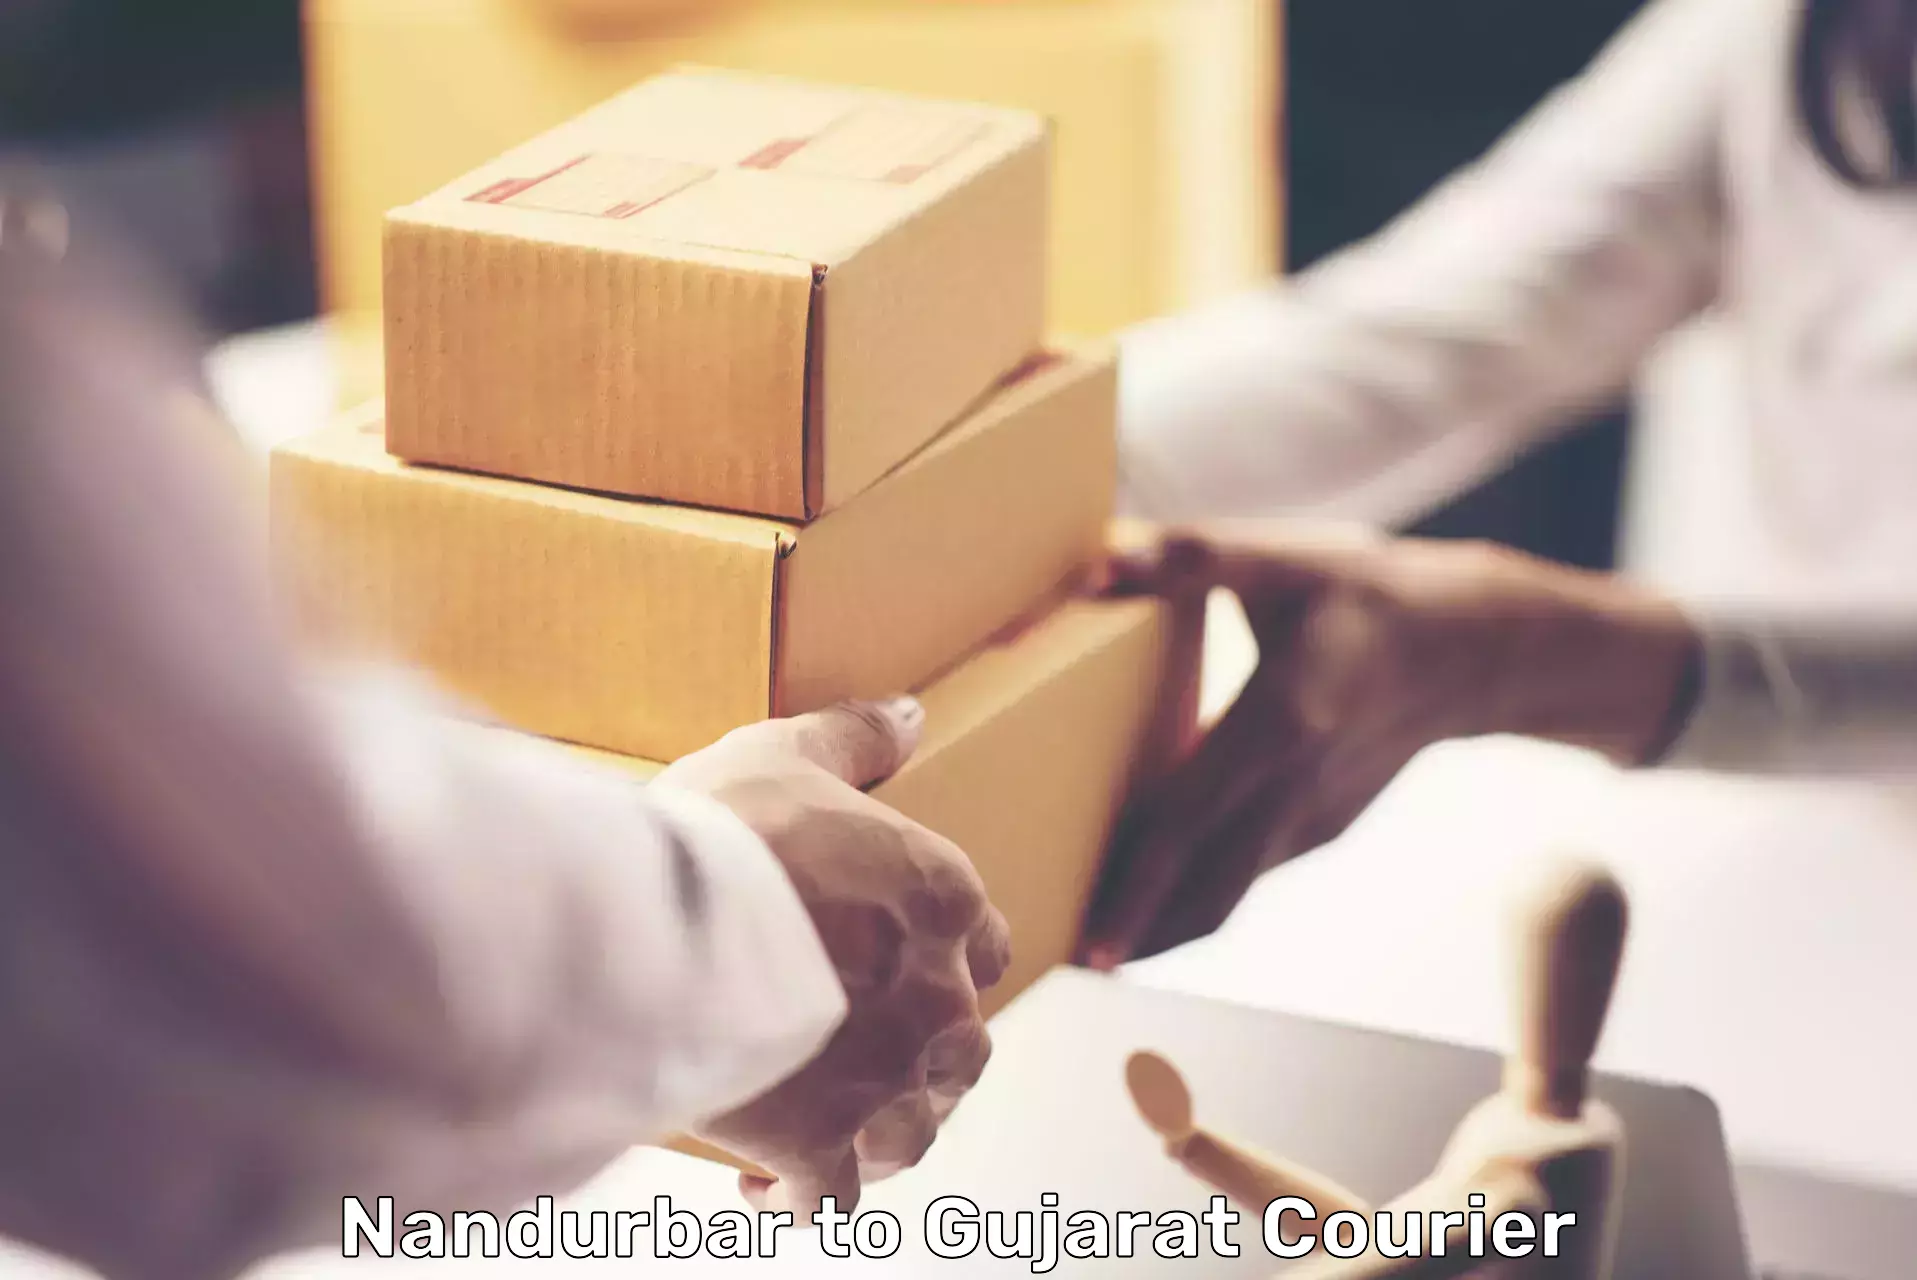 Affordable parcel service Nandurbar to Hazira